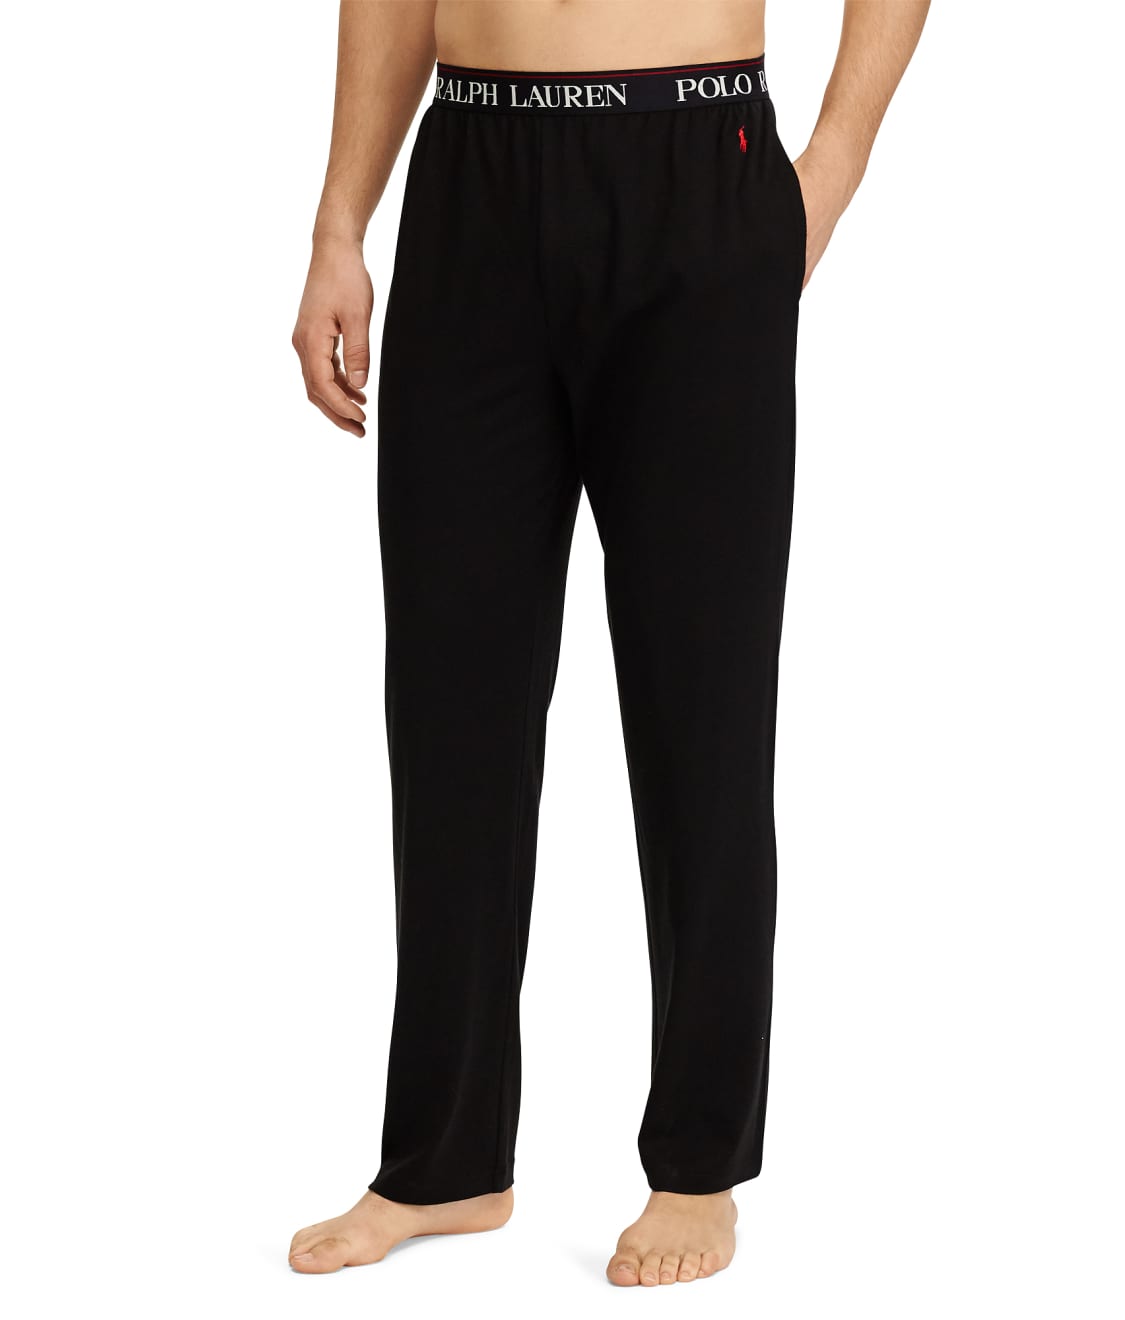 Polo Ralph Lauren Men's Loungewear, Solid Thermal Pants, 59% OFF